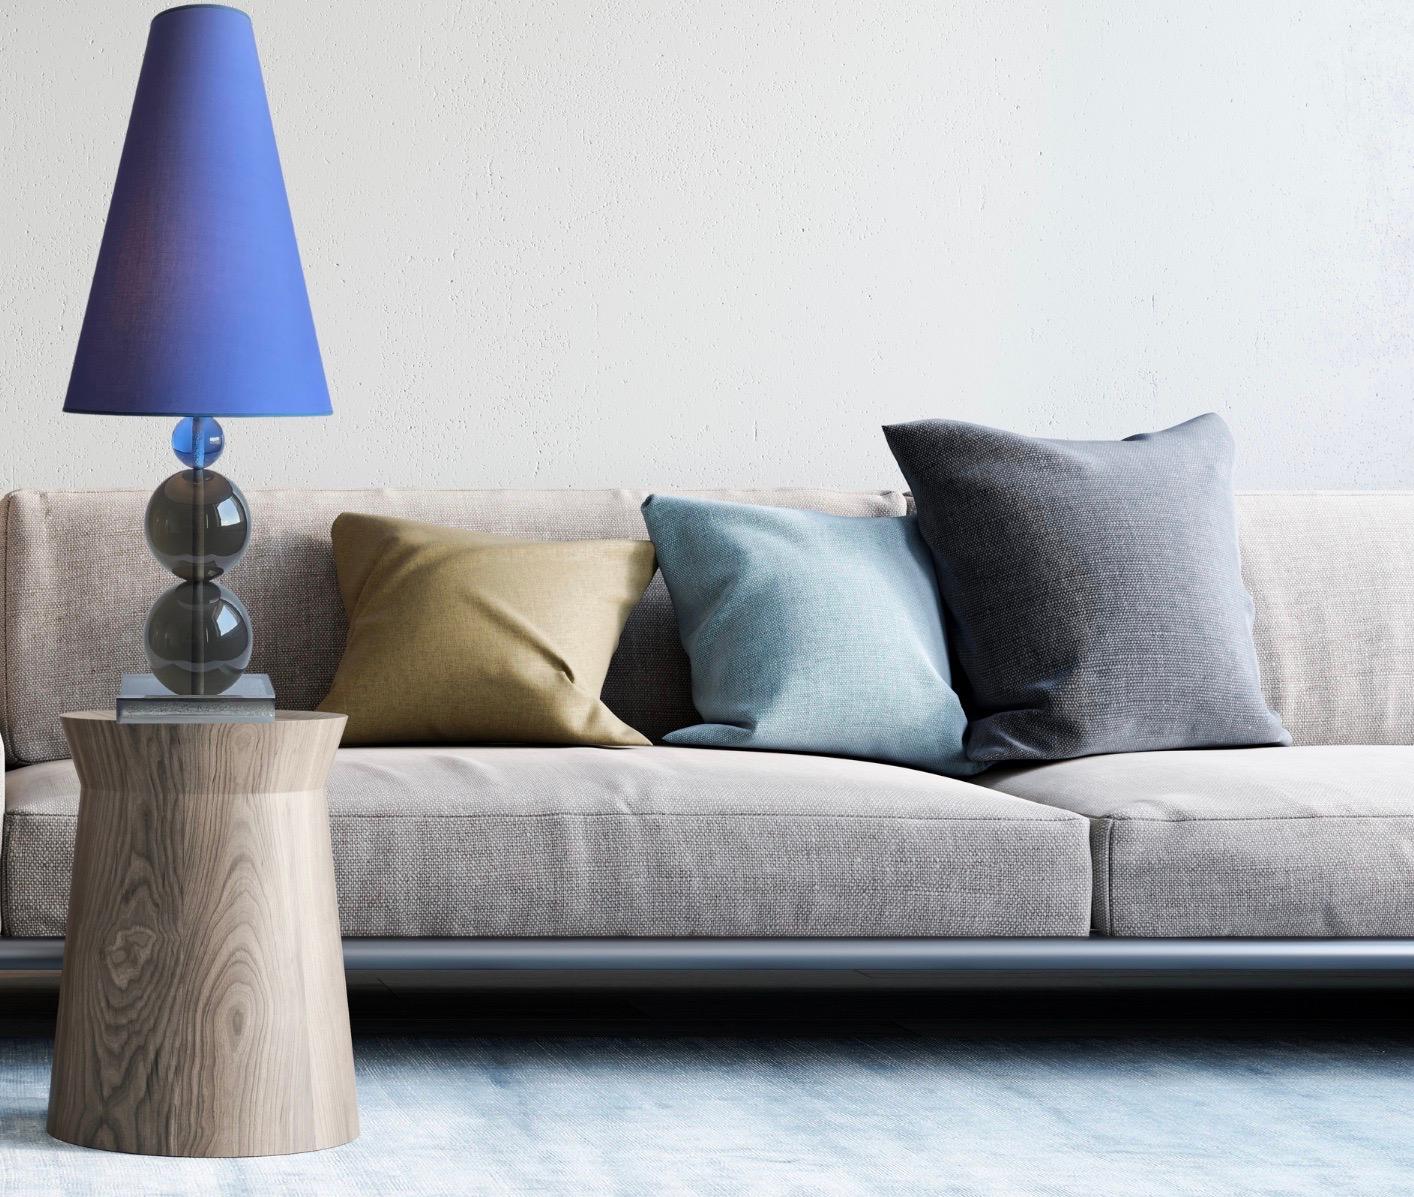 Italian Lampe de table élégante, polyvalente, 100% design italien, joyau de la maison en vente